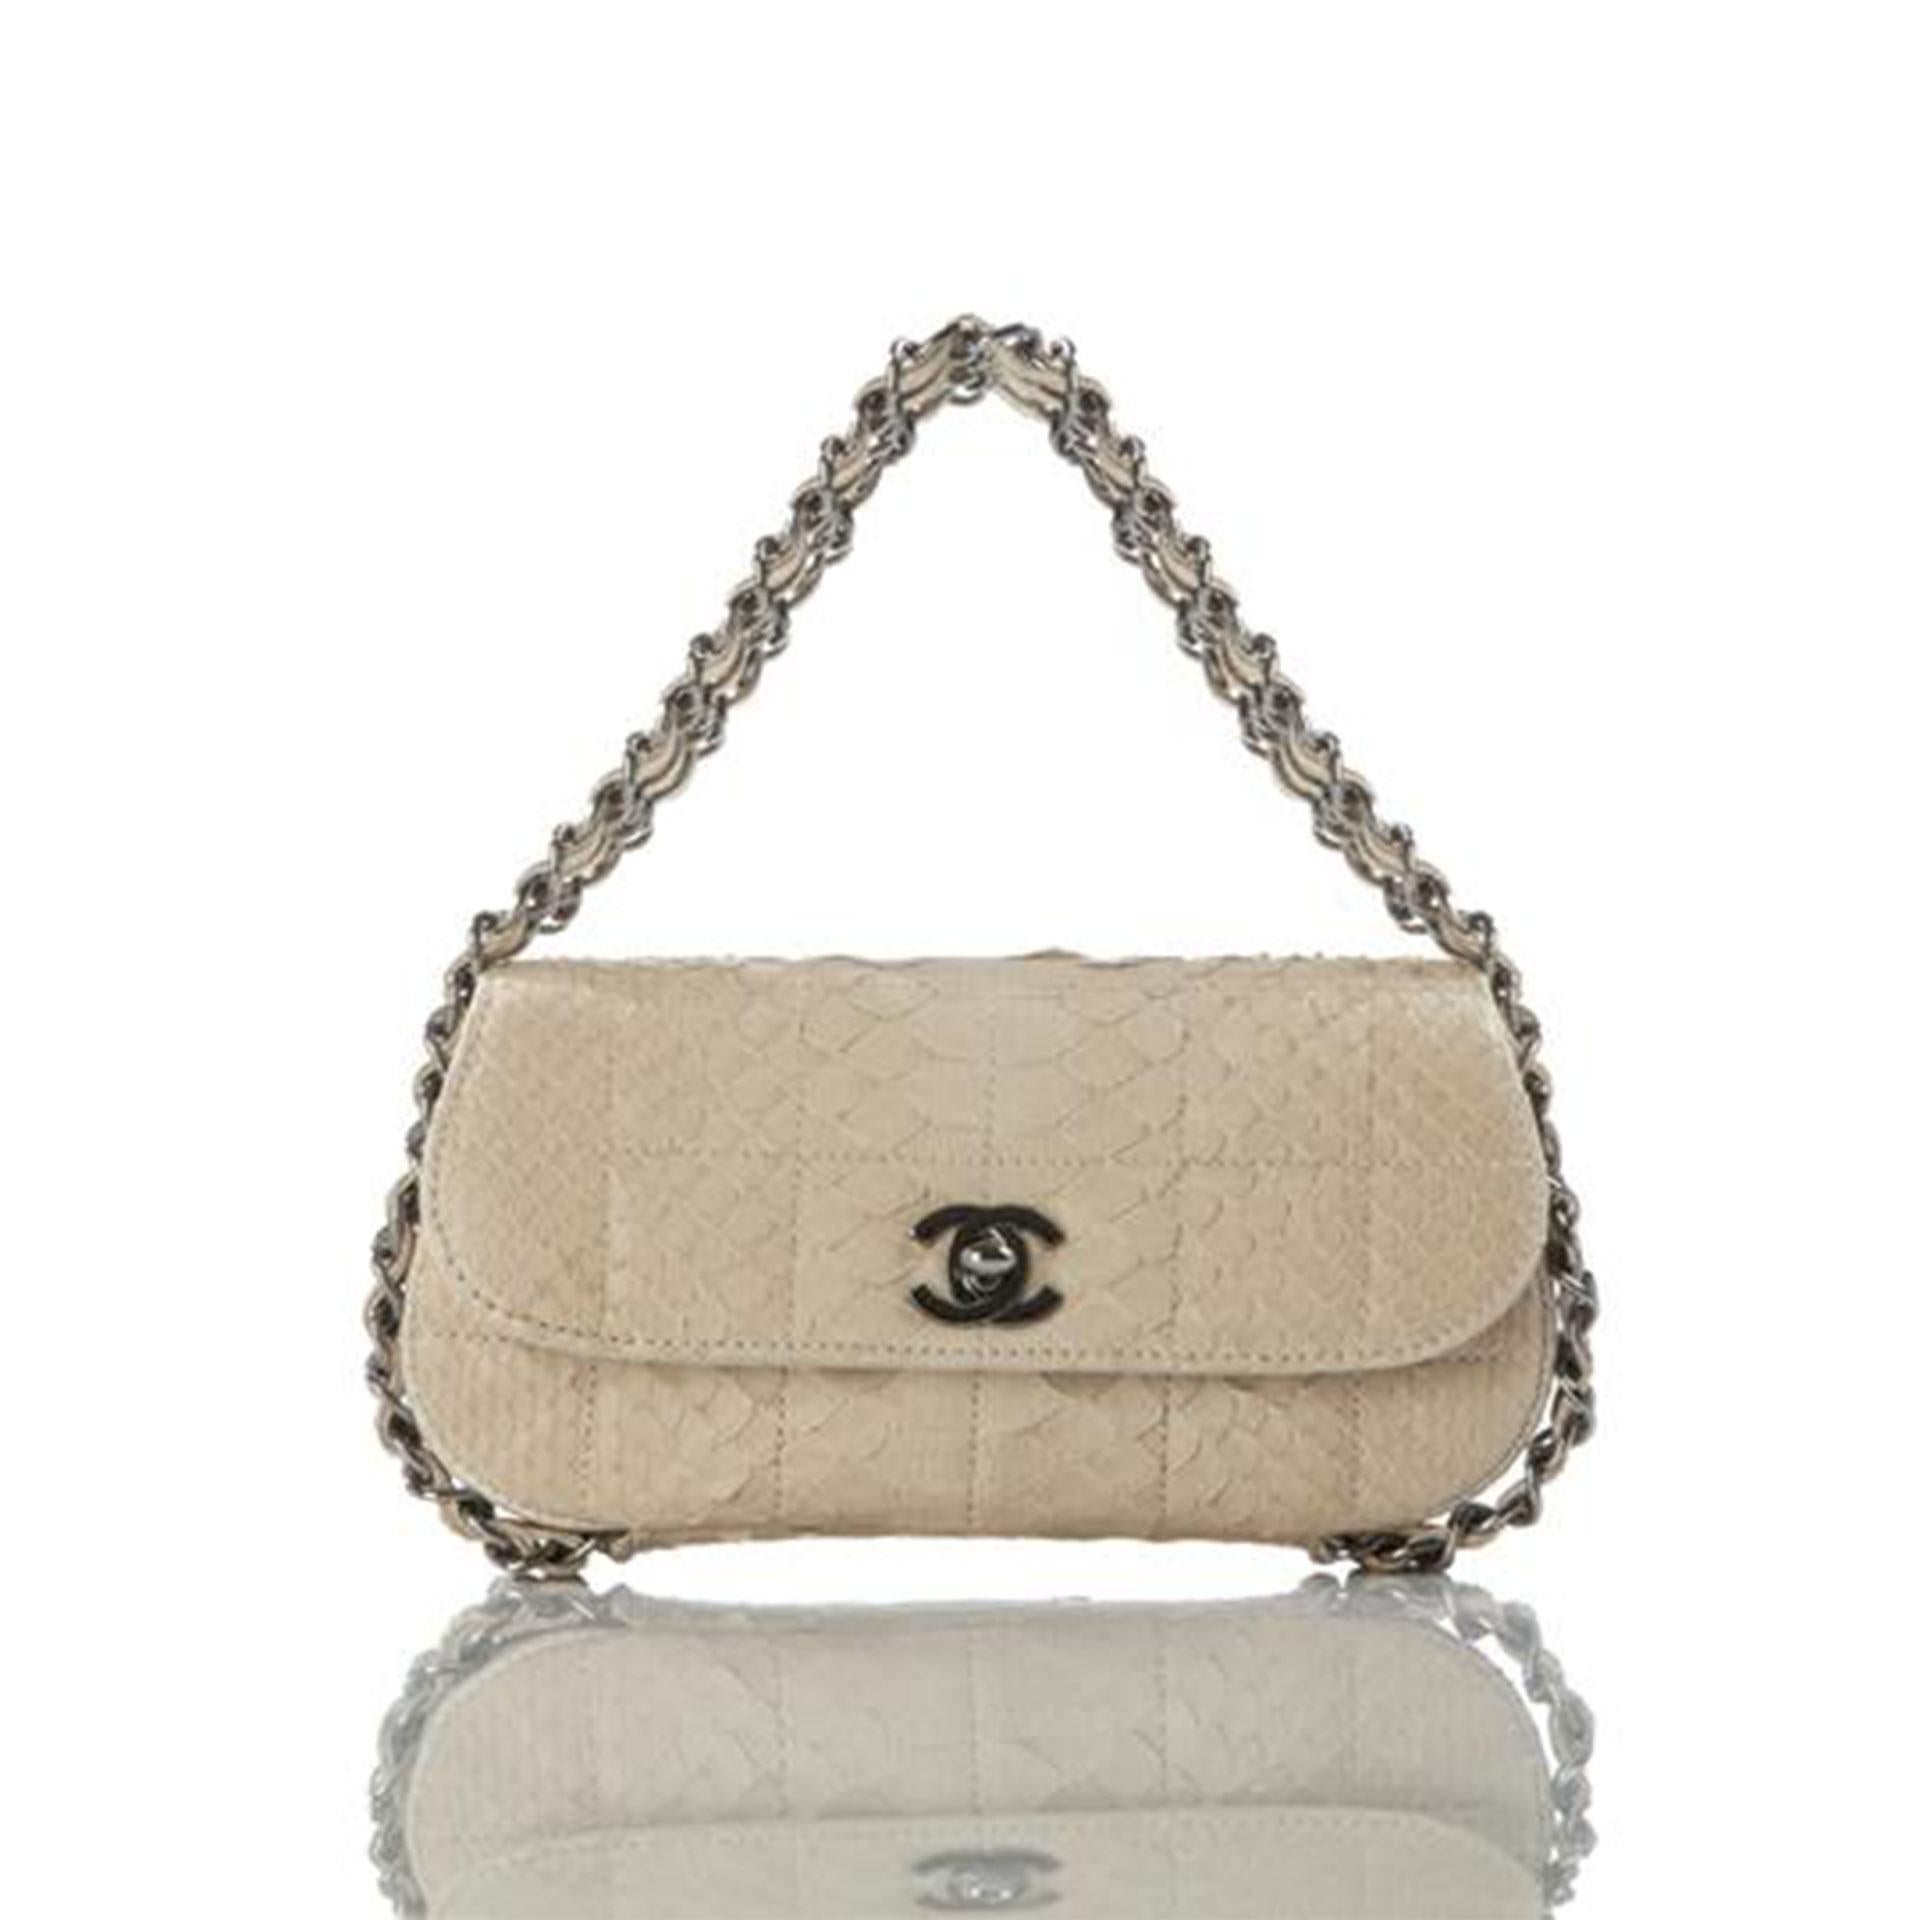 Chanel 2004 Beige Mini Flap Beige Cream Python Mini Clutch Top Handle Flap Bag In Good Condition For Sale In Miami, FL